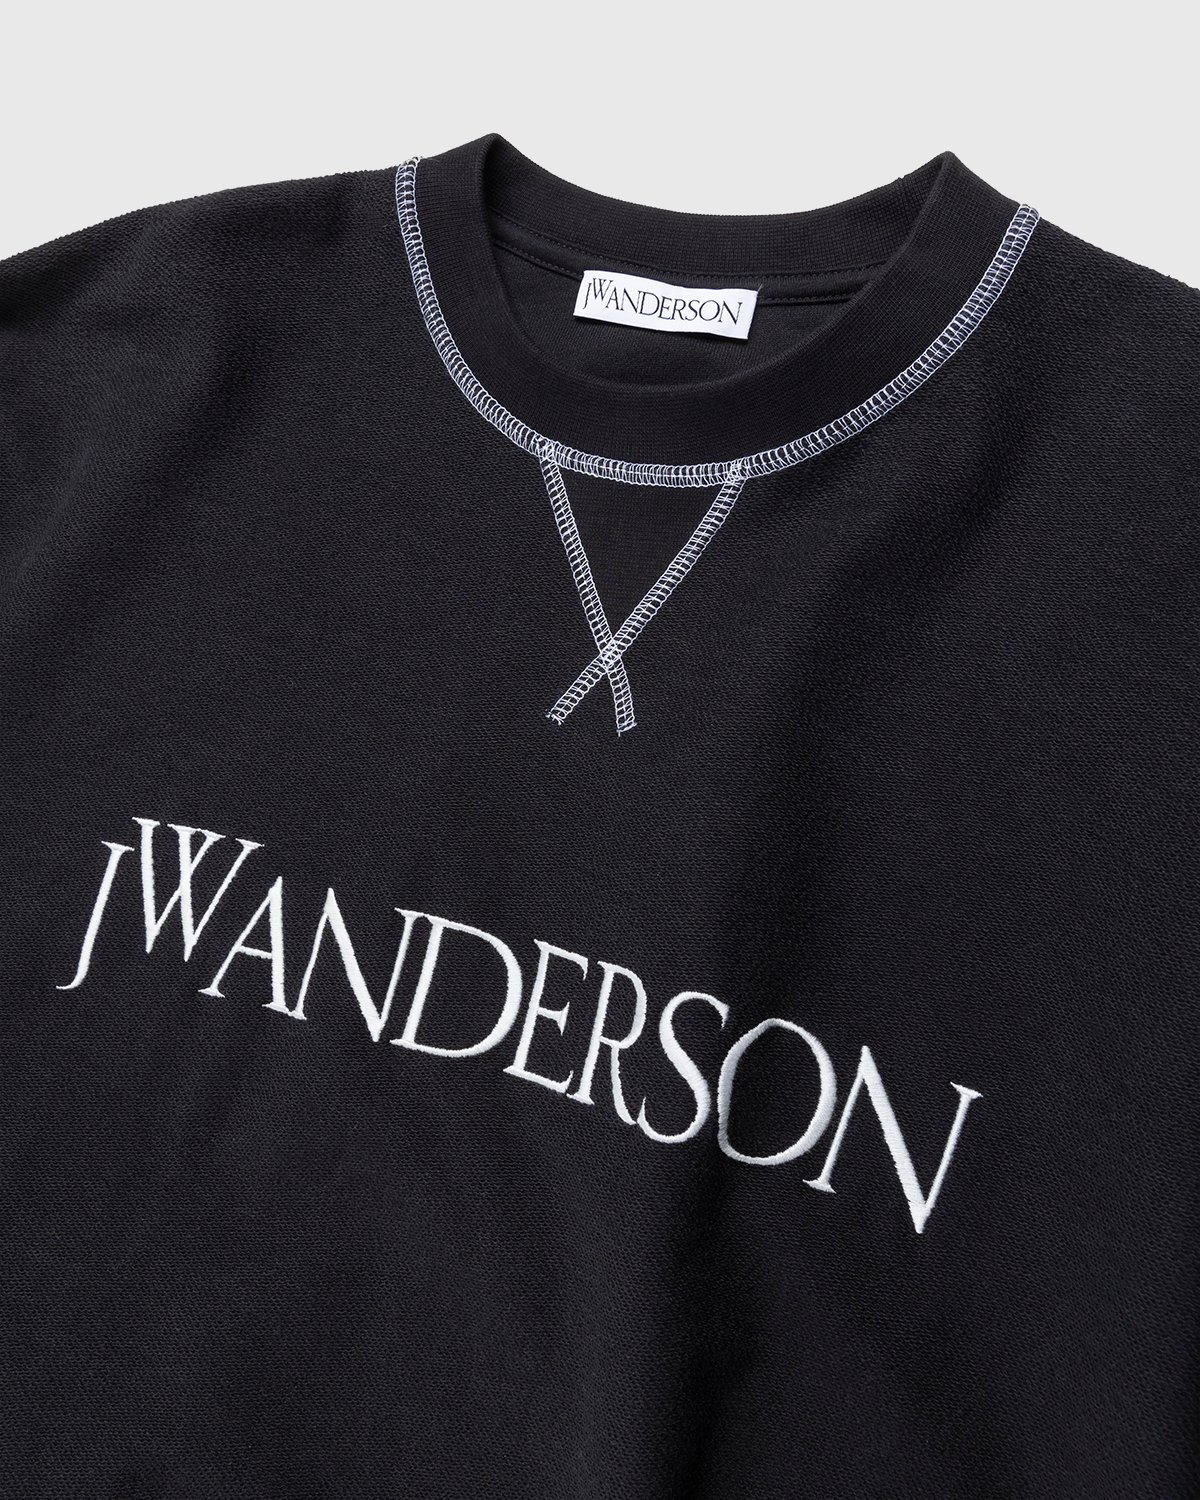 J.W. Anderson - Inside Out Contrast Sweatshirt Black - Clothing - Black - Image 3